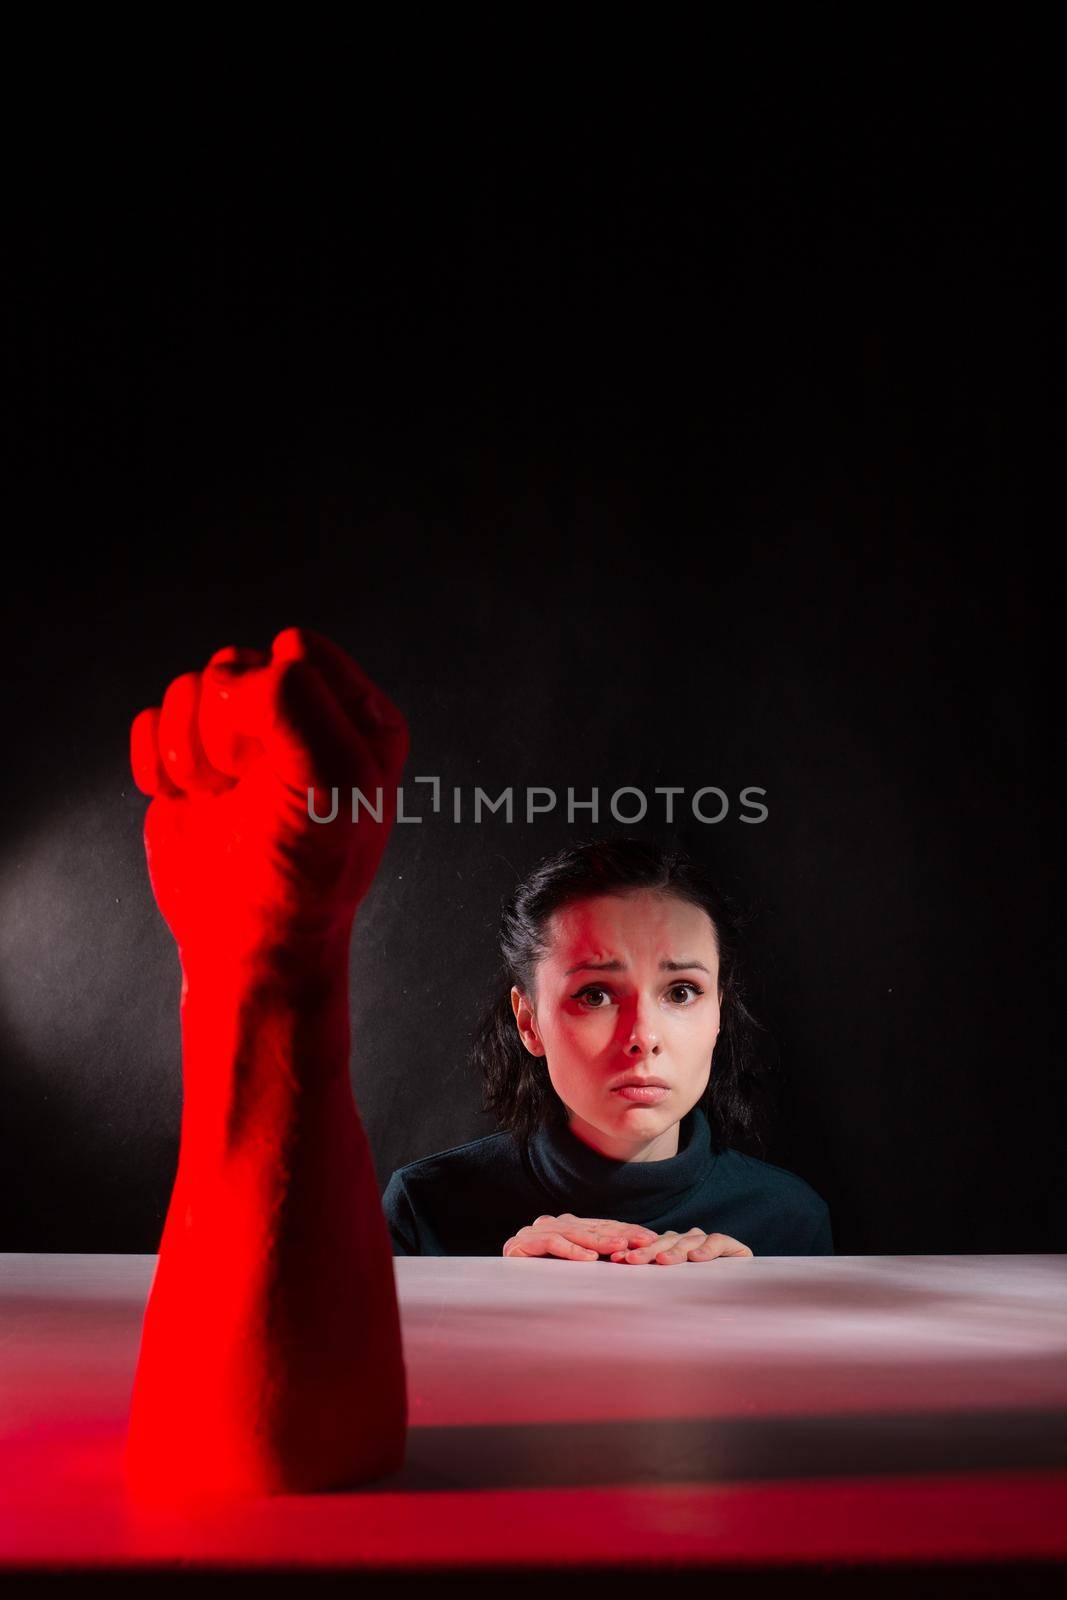 woman afraid of red hand, symbol of dictatorship, black background by shilovskaya